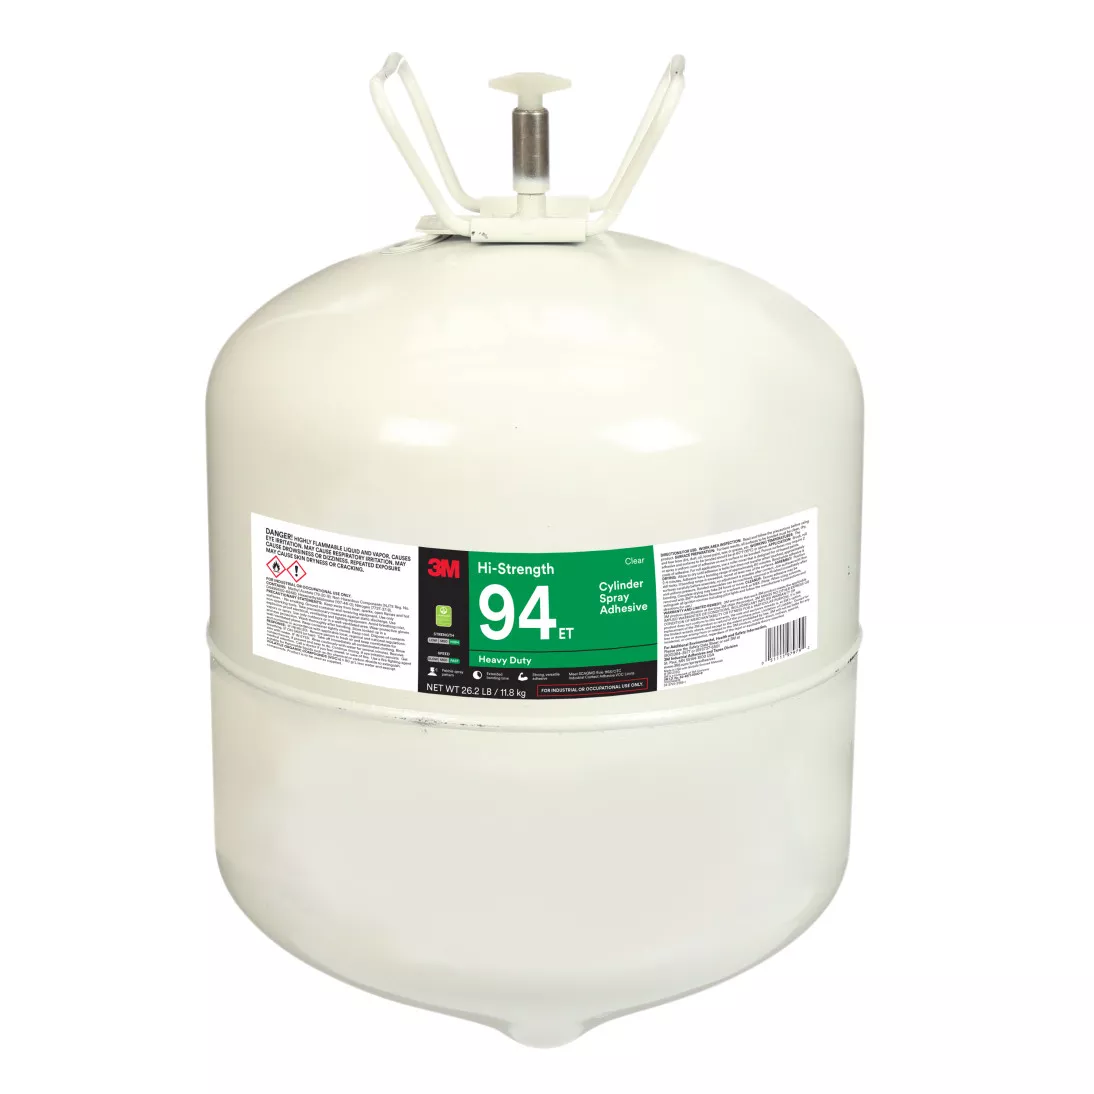 3M™ Hi-Strength 94 ET Cylinder Spray Adhesive, Clear, Large Cylinder
(Net Wt 26.2 lb), 1/case